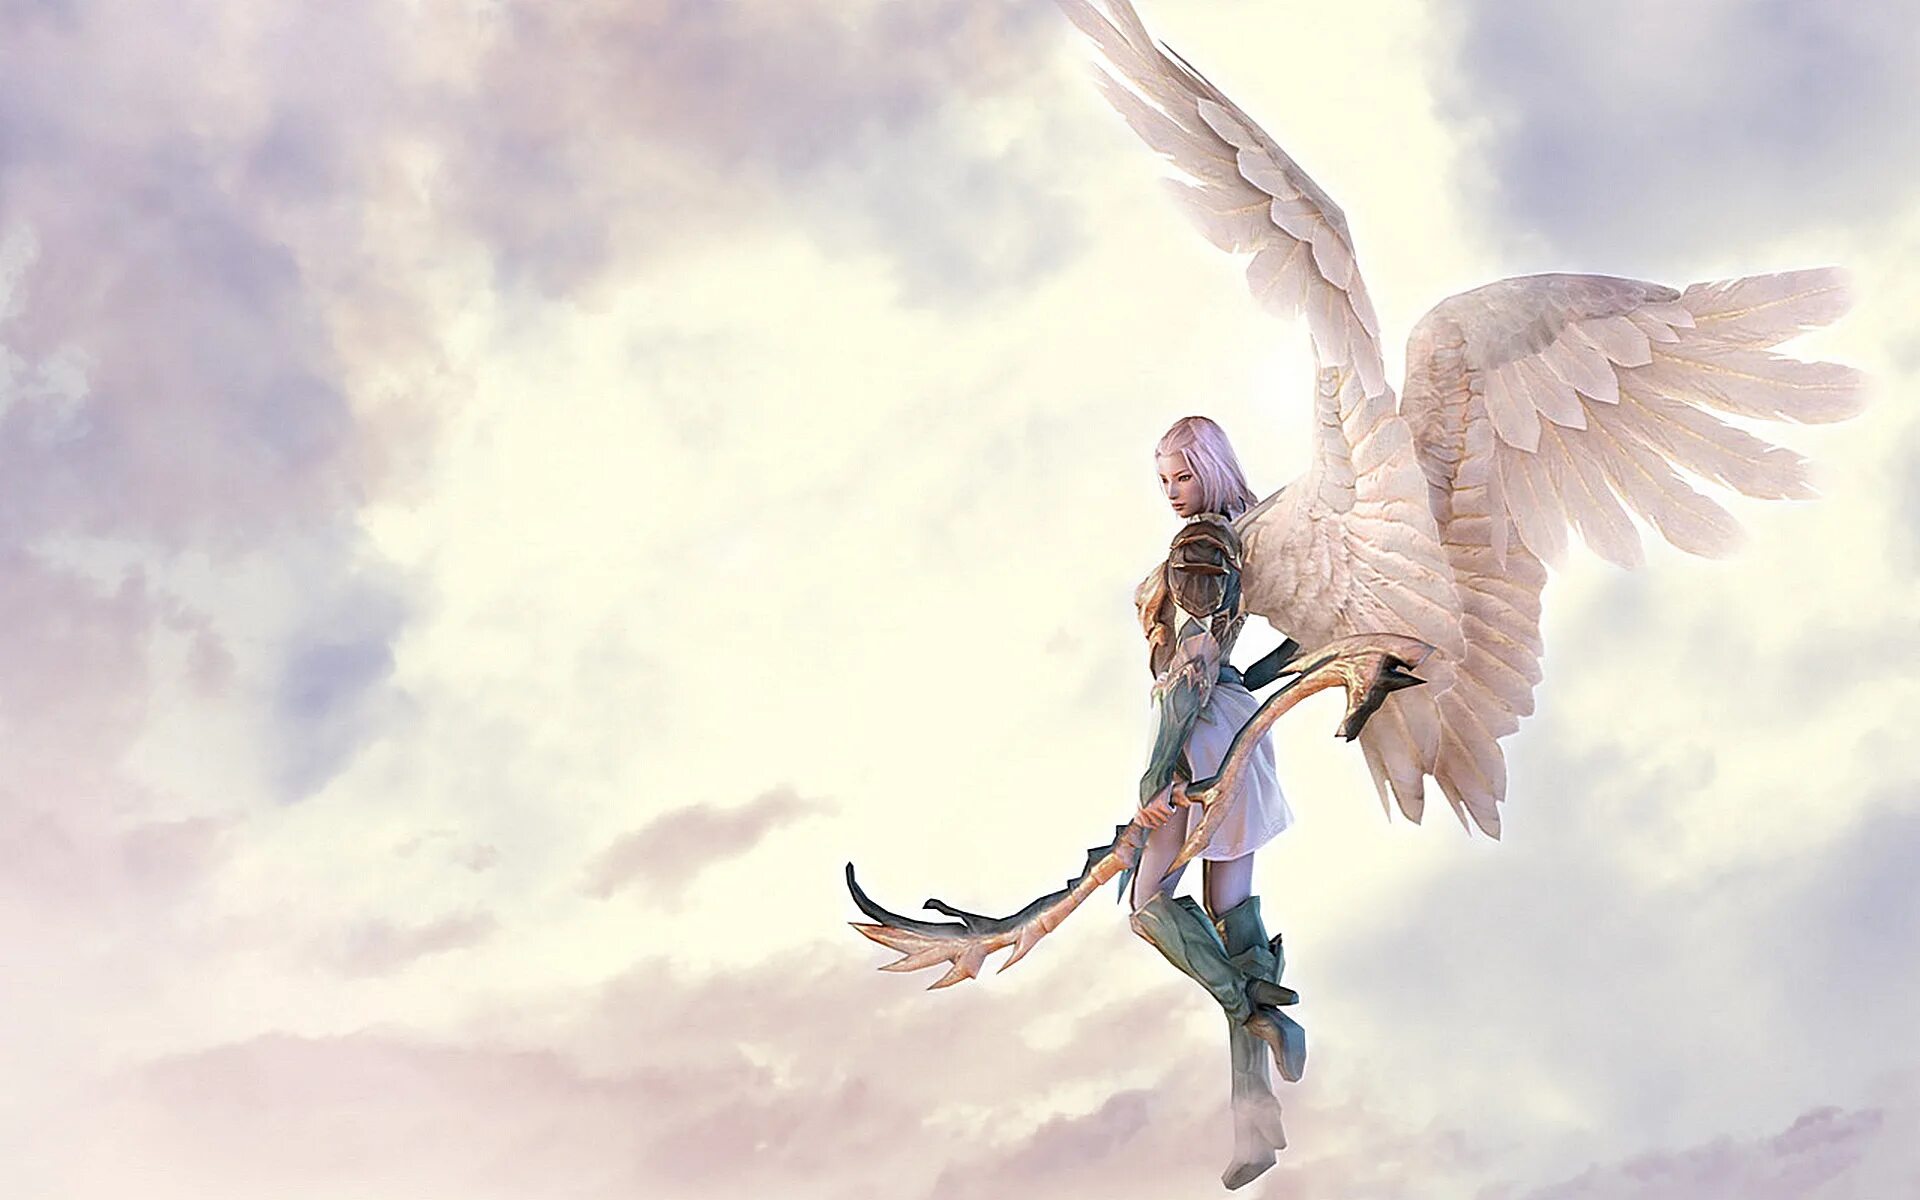 Крылатые строки. Авариэль крылатые эльфы. Авариэль крылатые эльфы арт. Человек с крыльями. Ангелы летают.